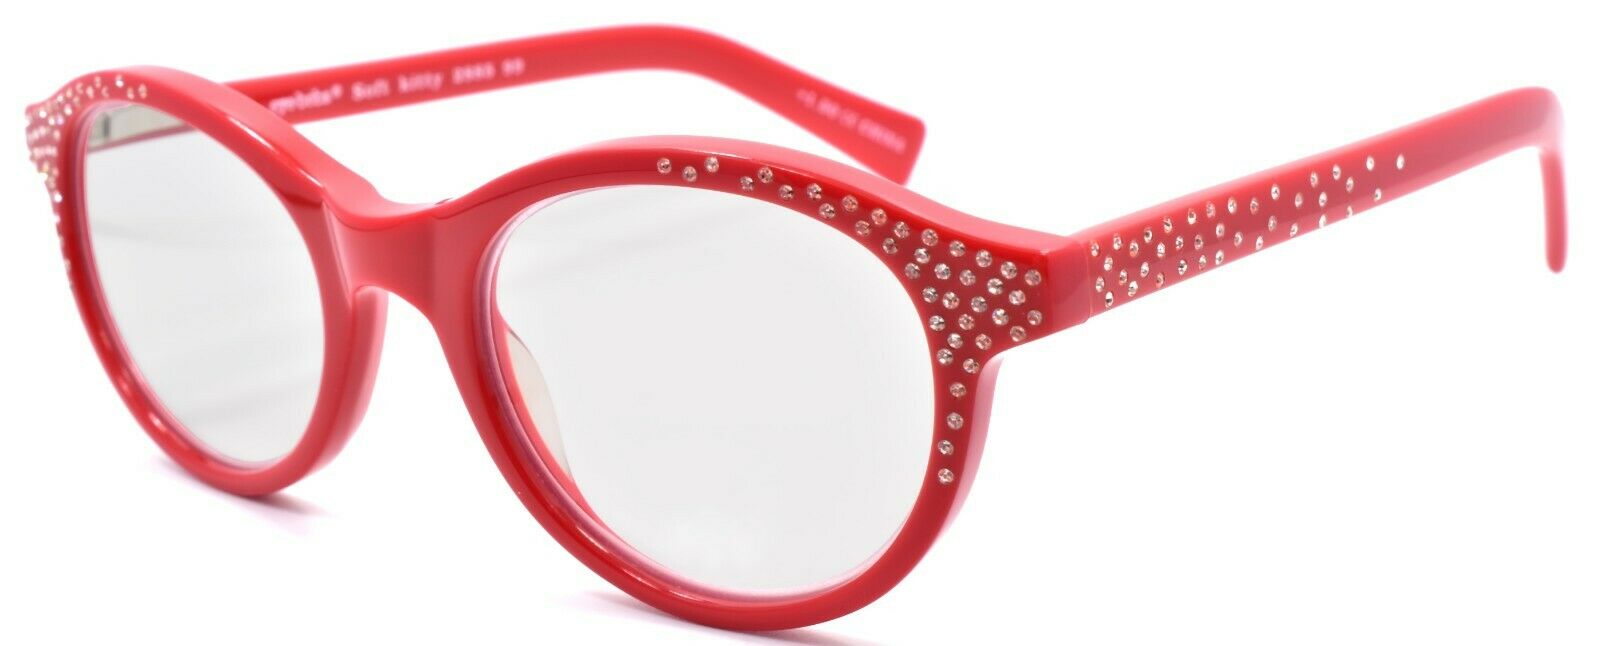 1-Eyebobs Soft Kitty 2885 99 Women's Reading Glasses Red / Rhinestones +2.00-842446052232-IKSpecs